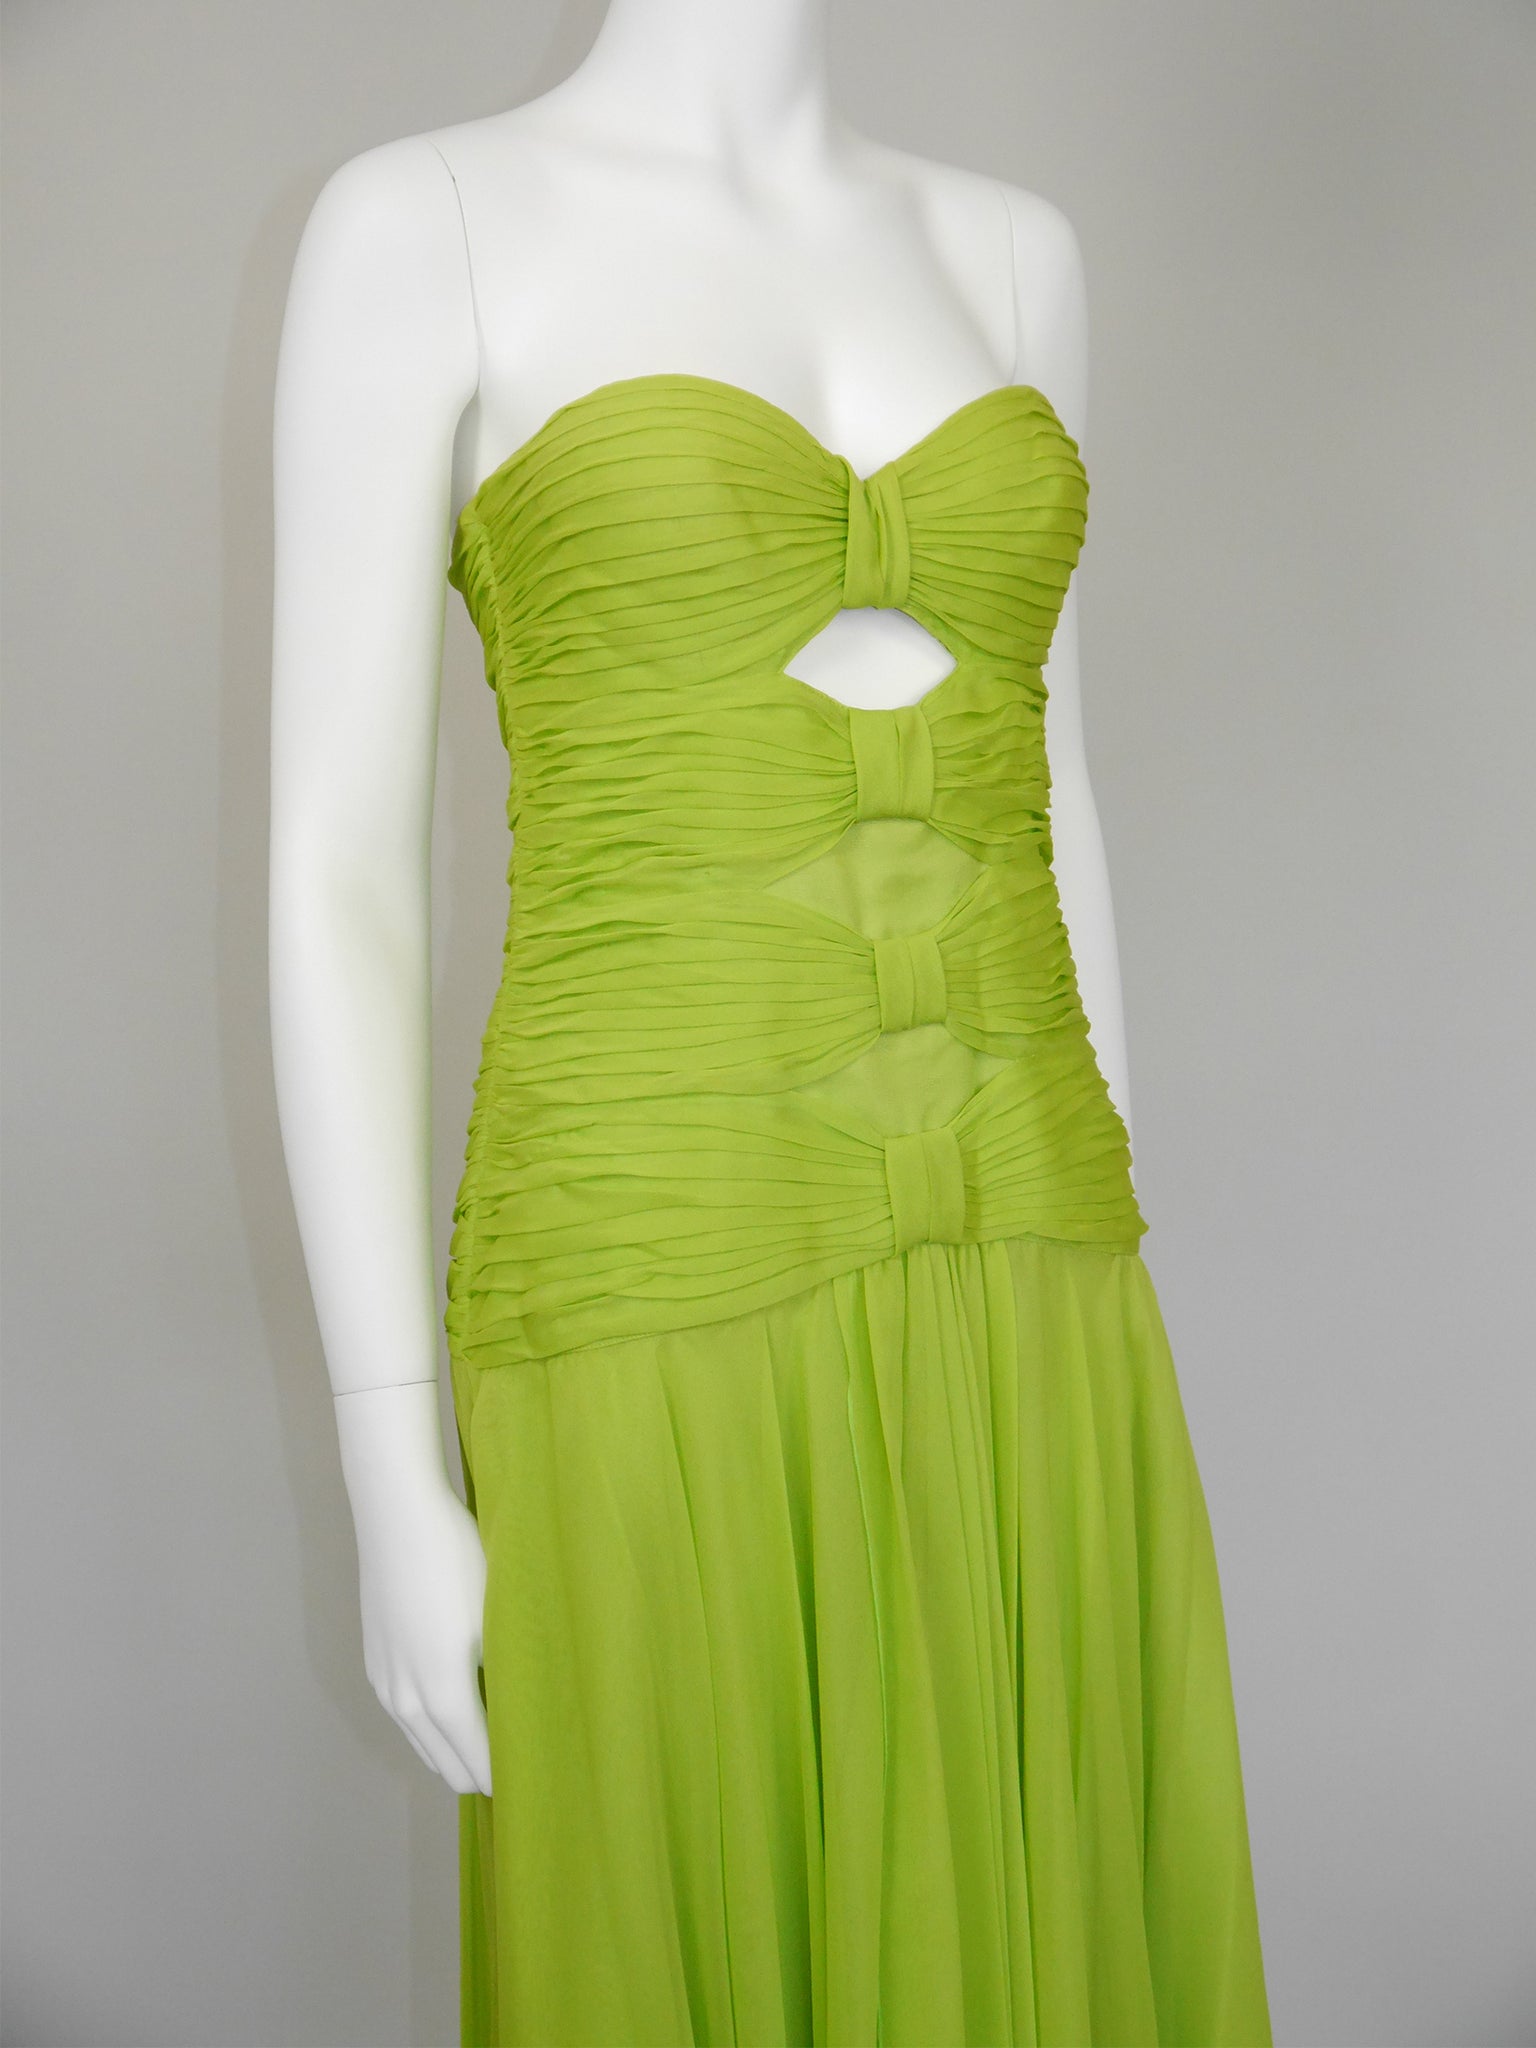 LOUIS FÉRAUD 1980s Vintage Lime Green Silk Bustier Evening Dress Size M